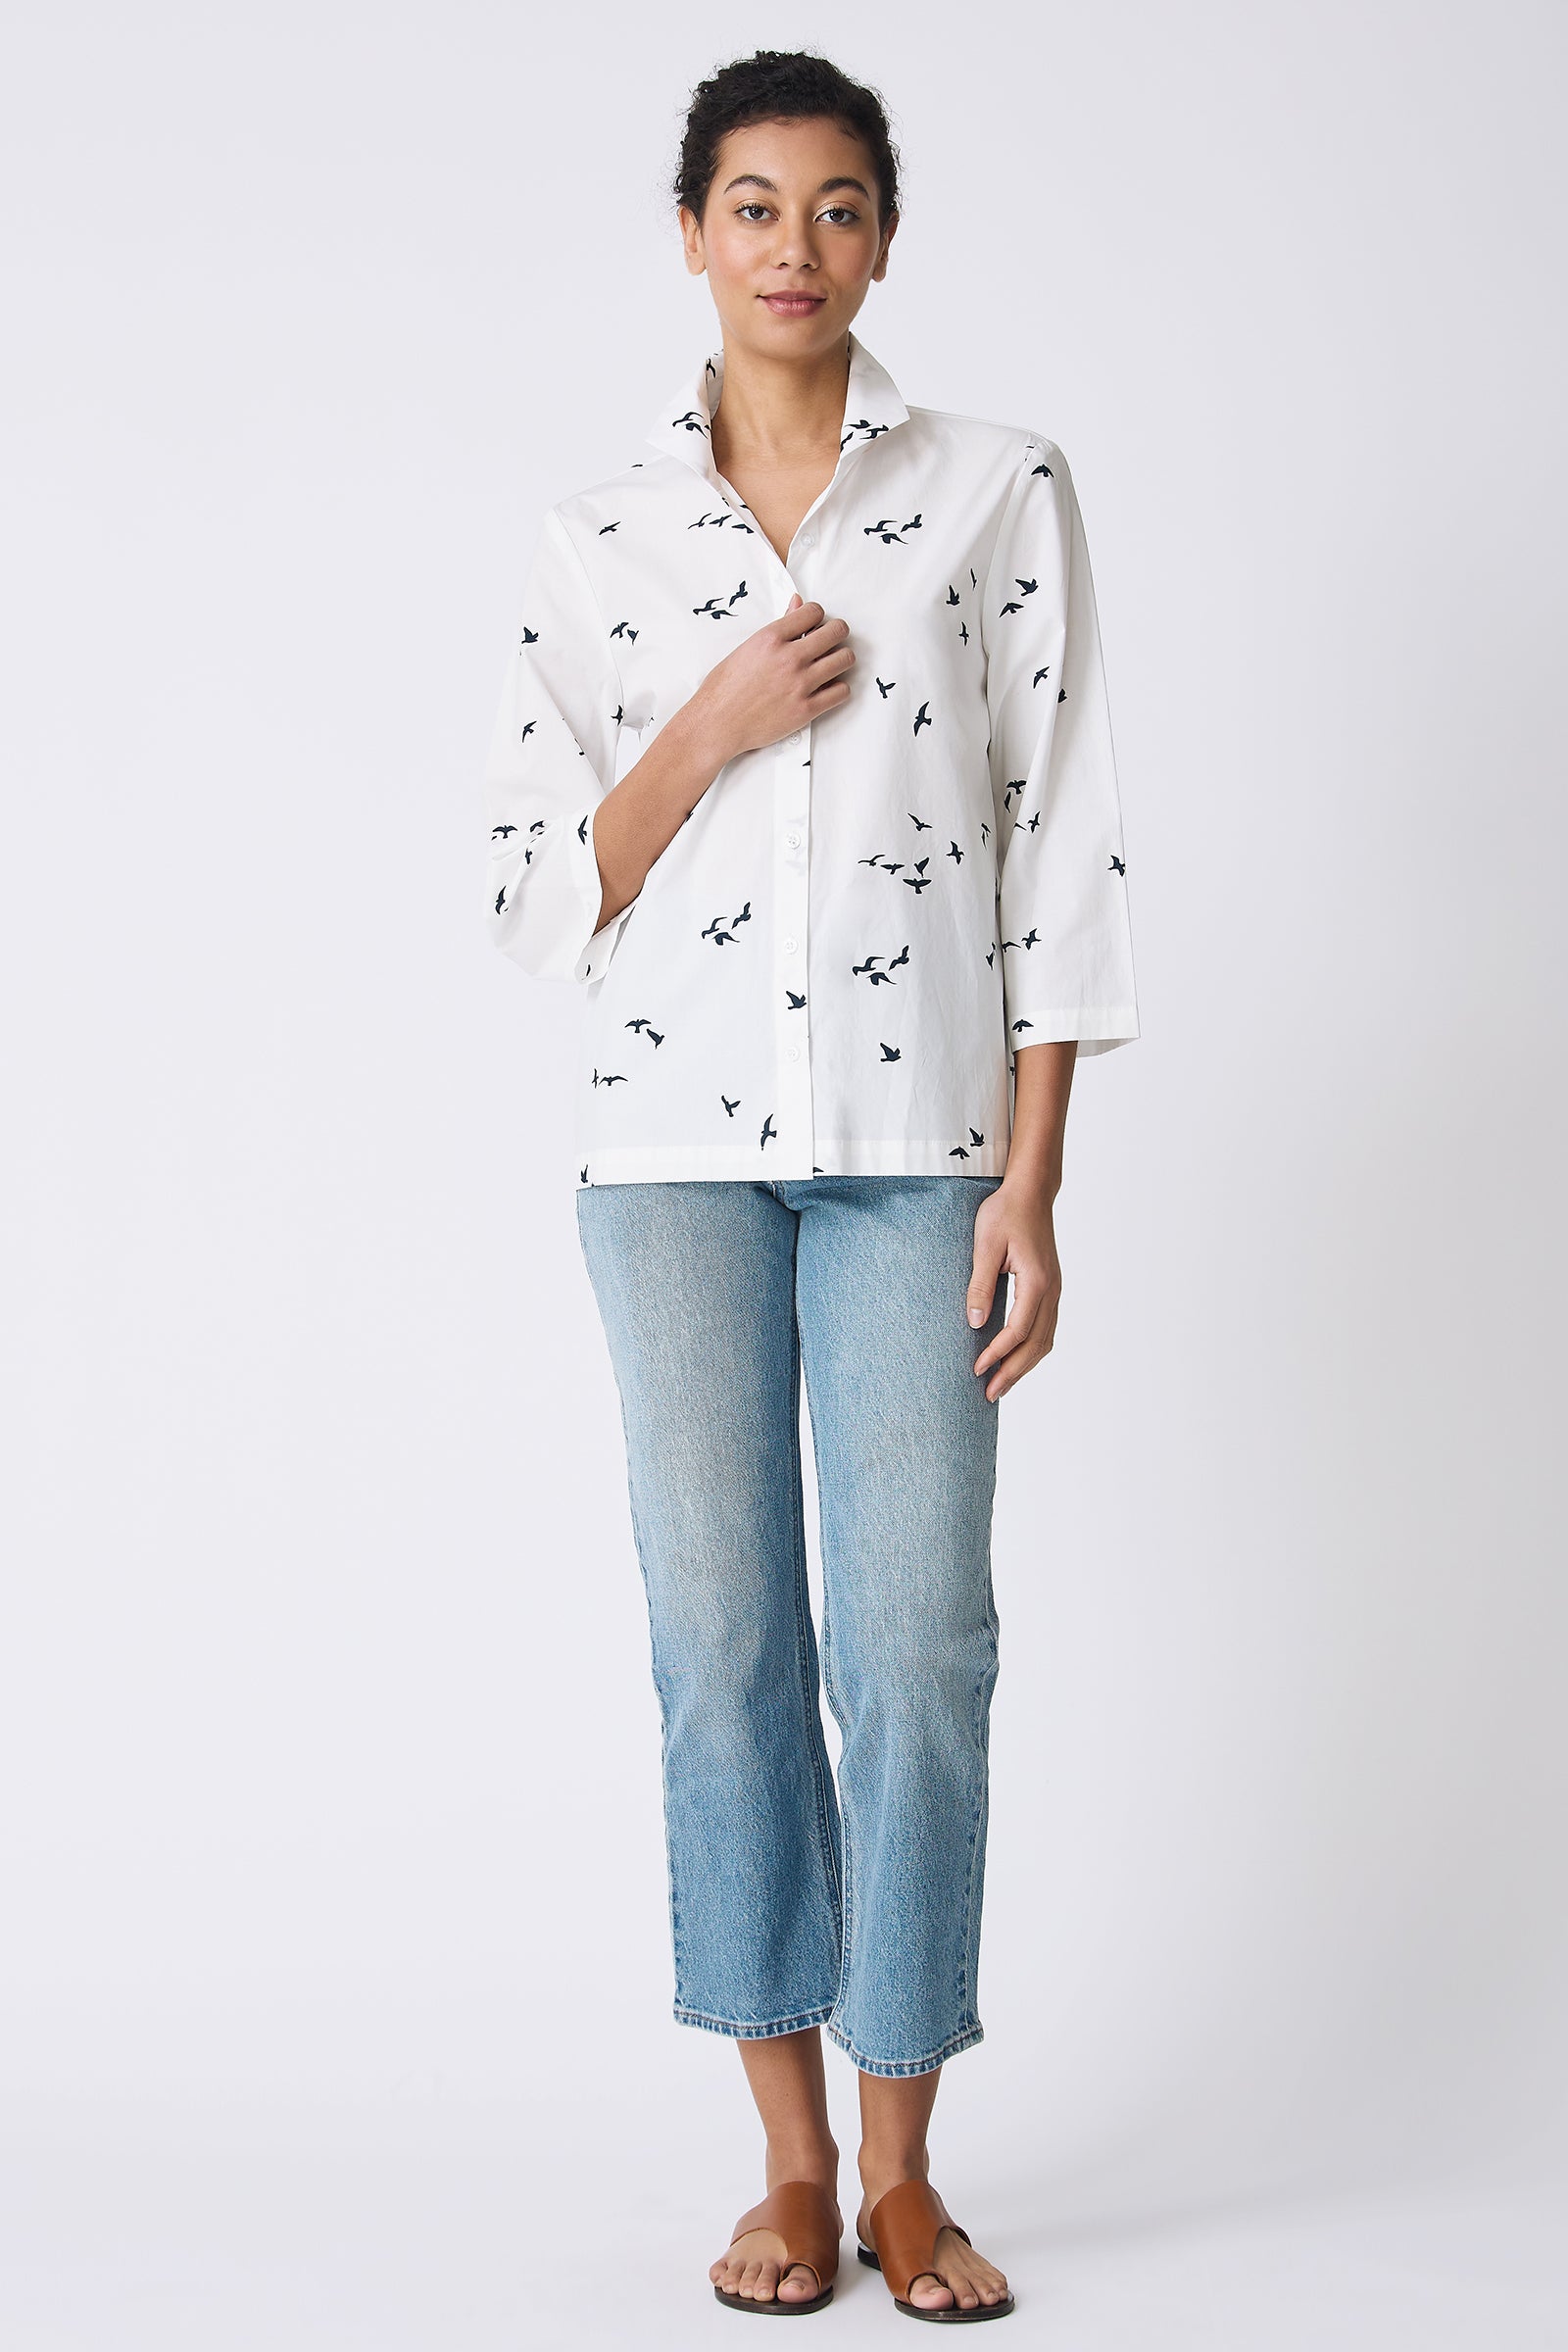 Kal Rieman 3/4 Sleeve Ginna Shirt in White Bird Print on model full front view